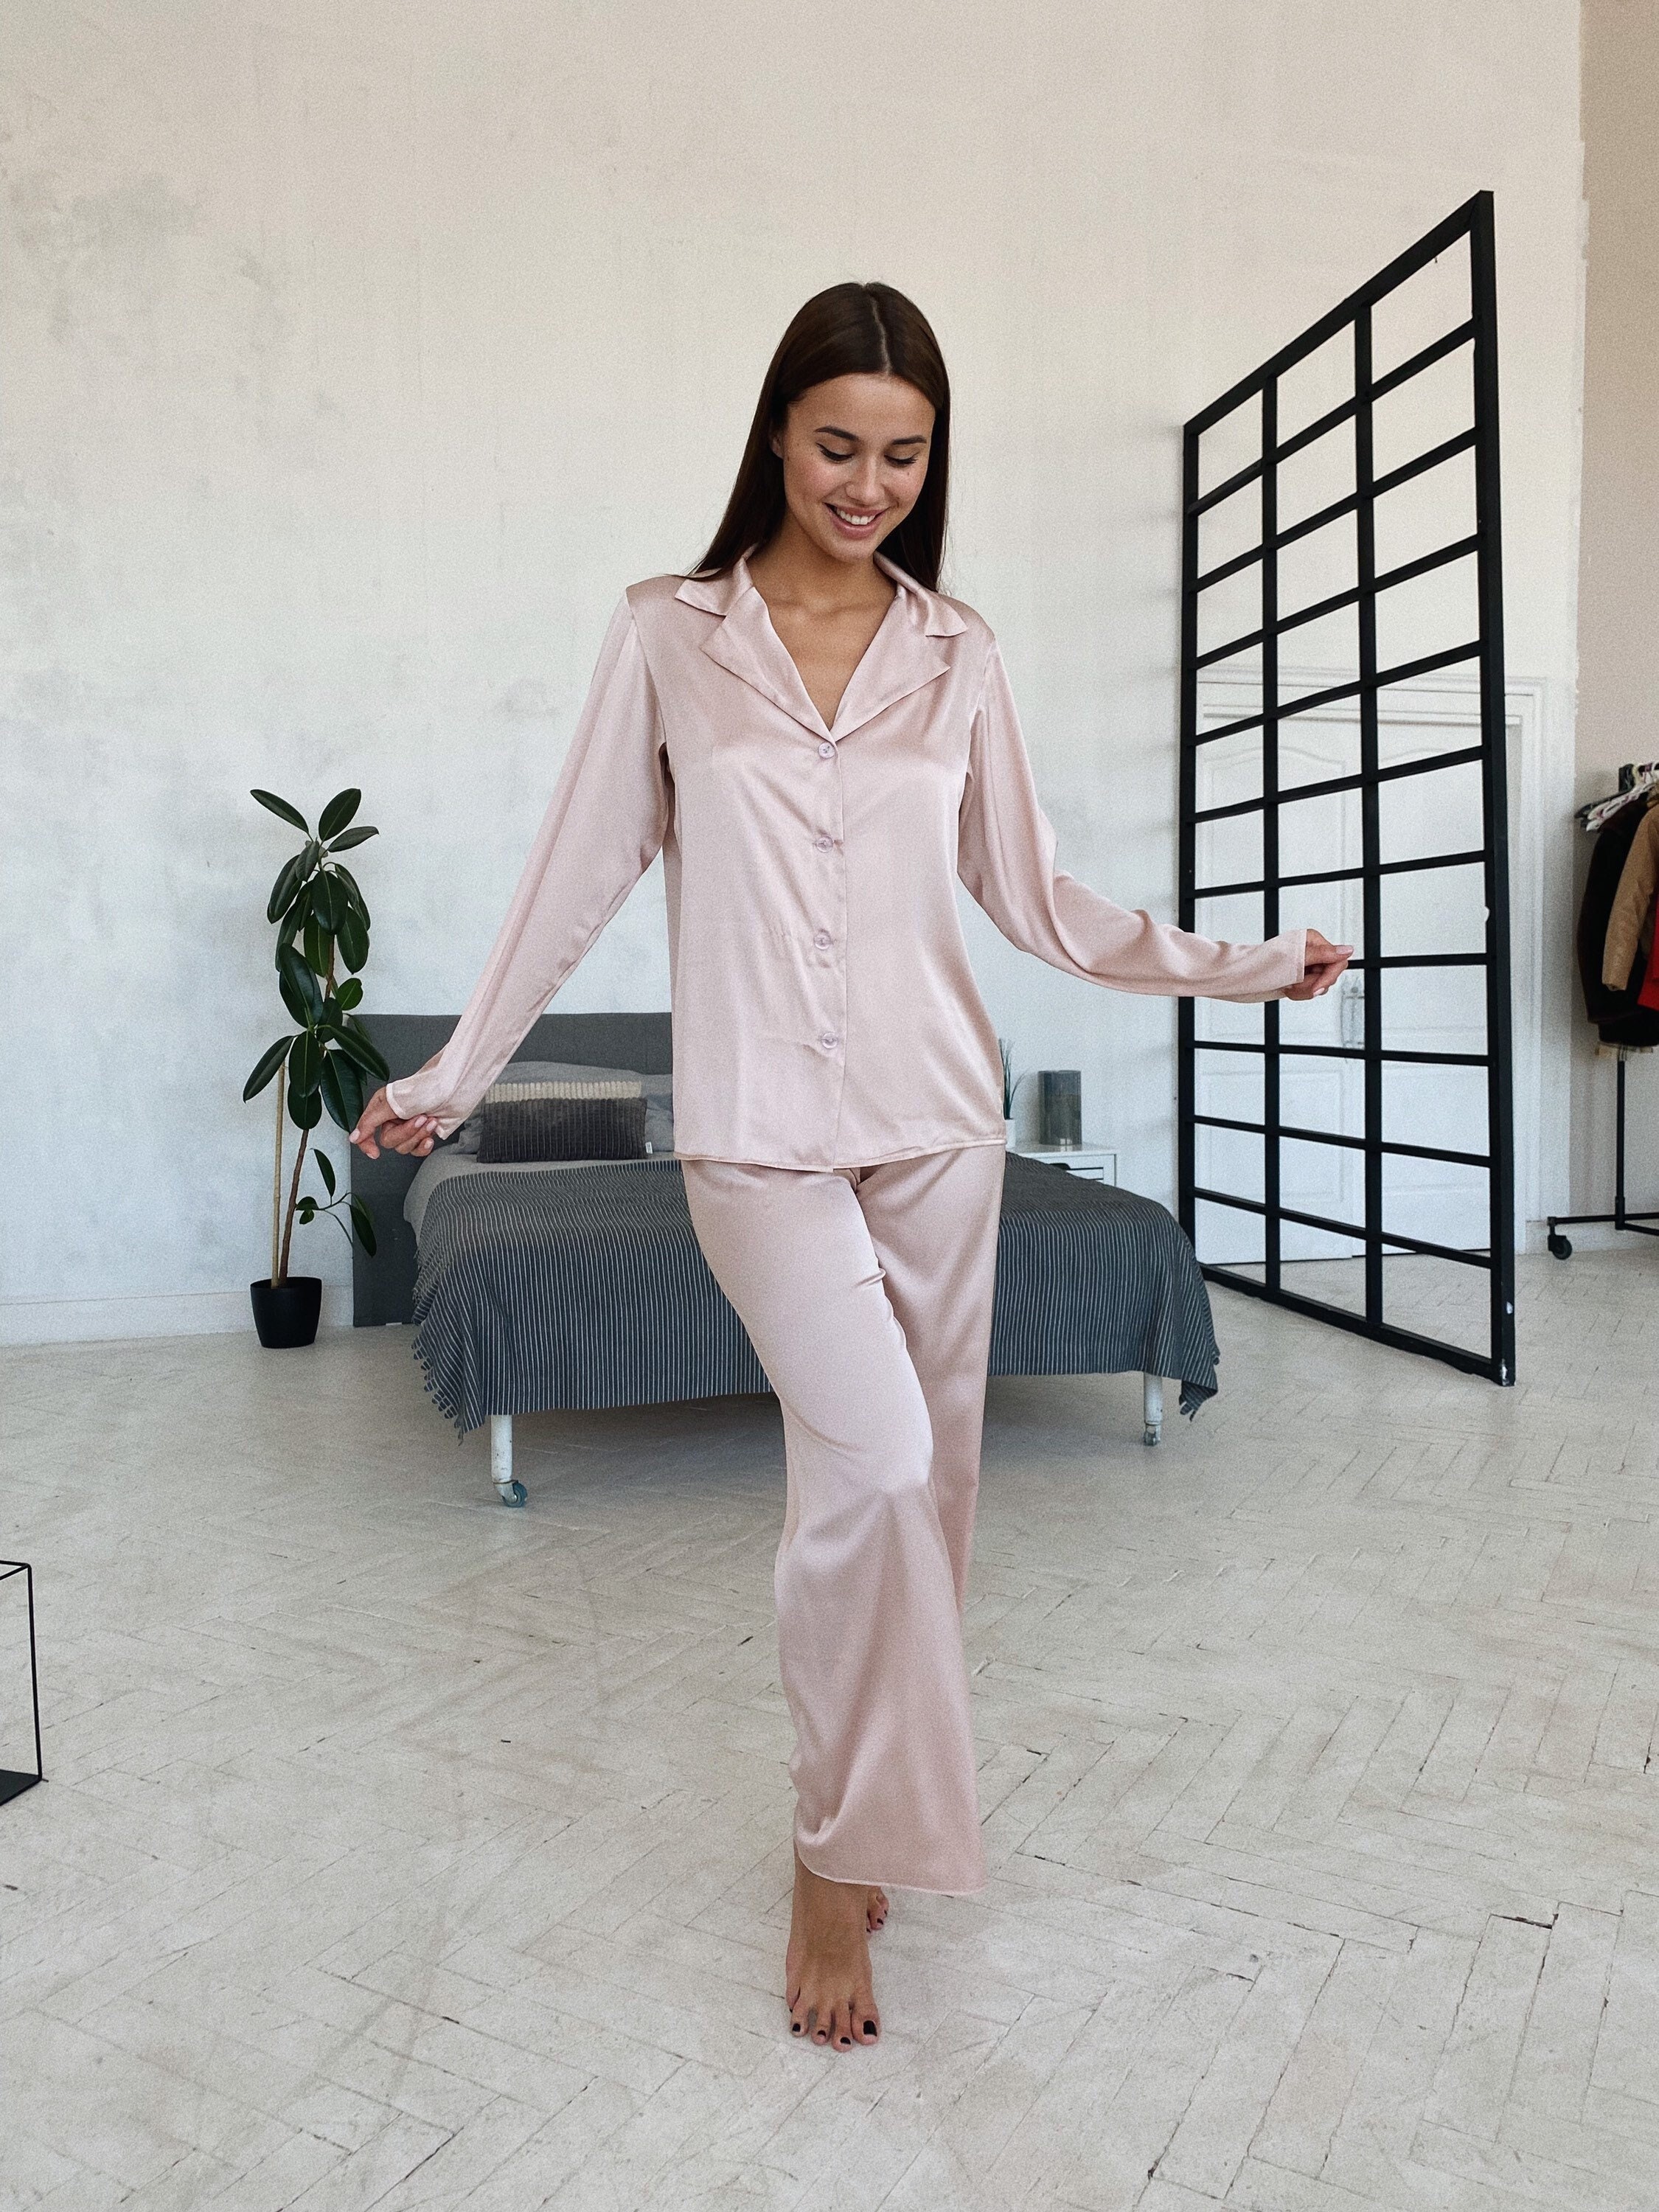  Romper Pajamas for Women Fuzzy Women Plus Size